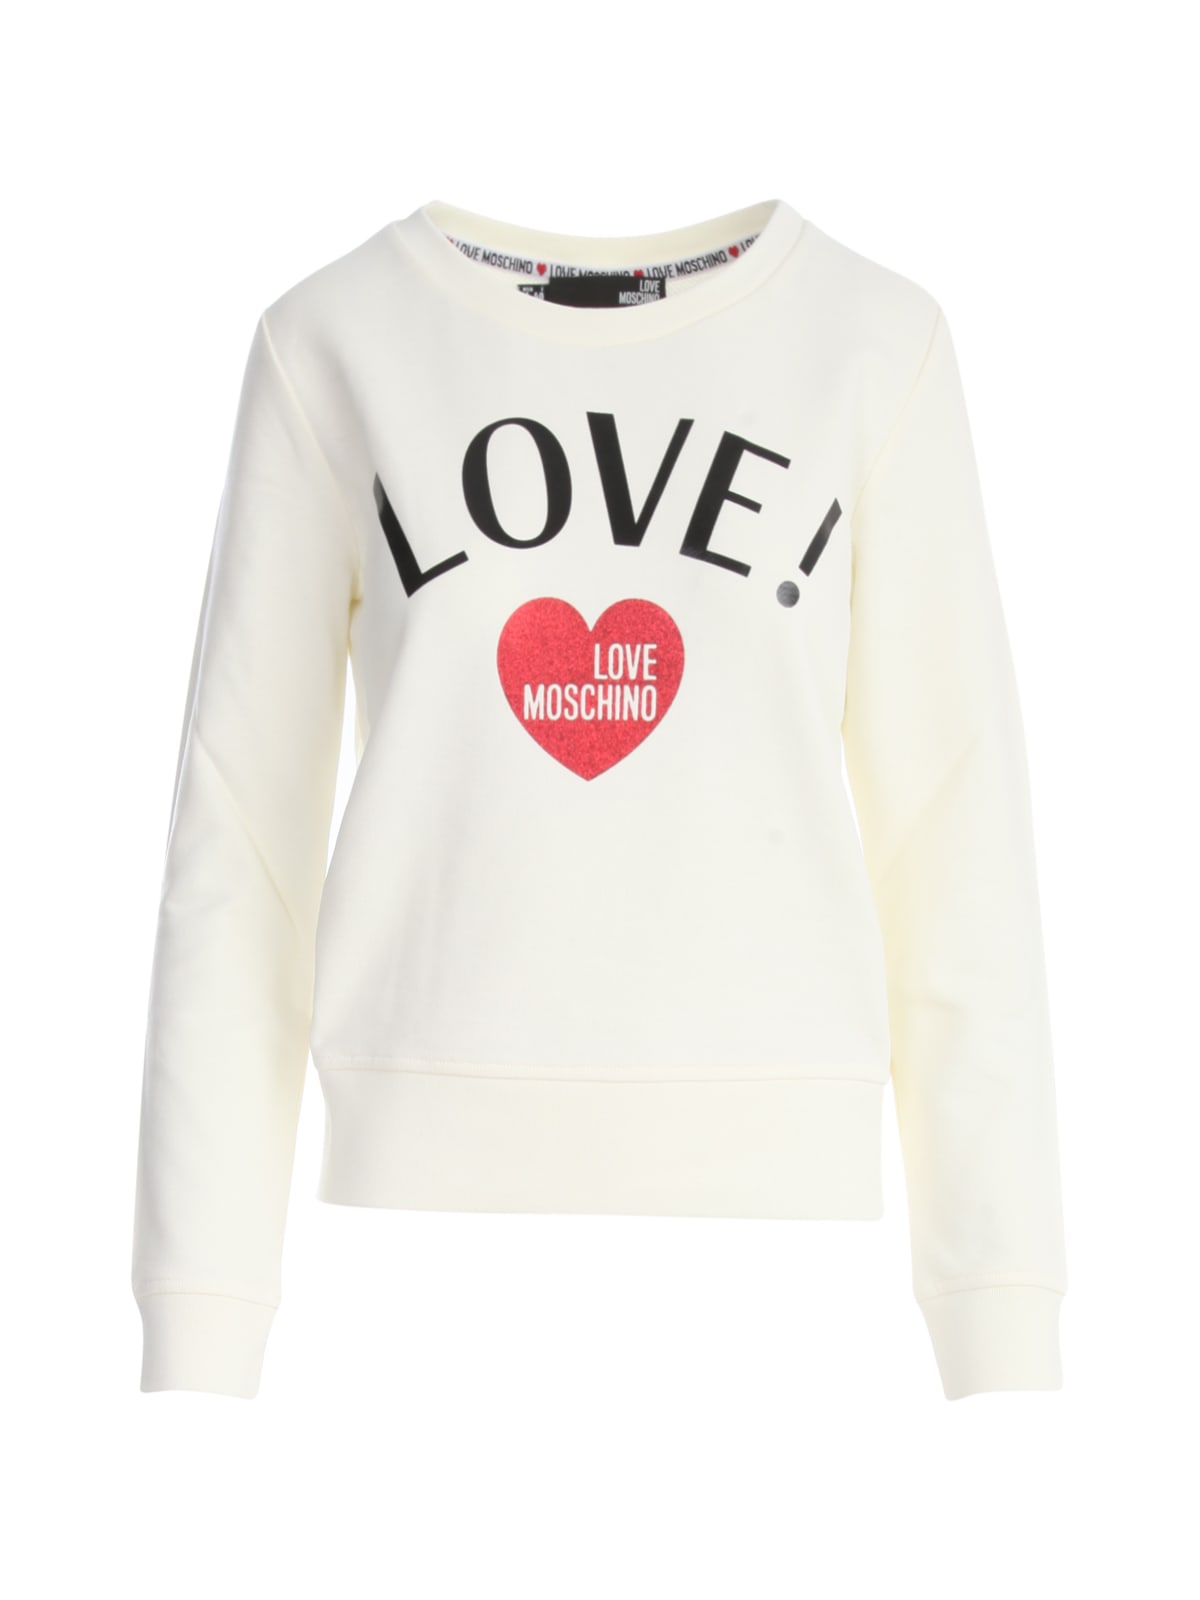 Love Moschino Big Love Printed Crew Neck Sweatshirt